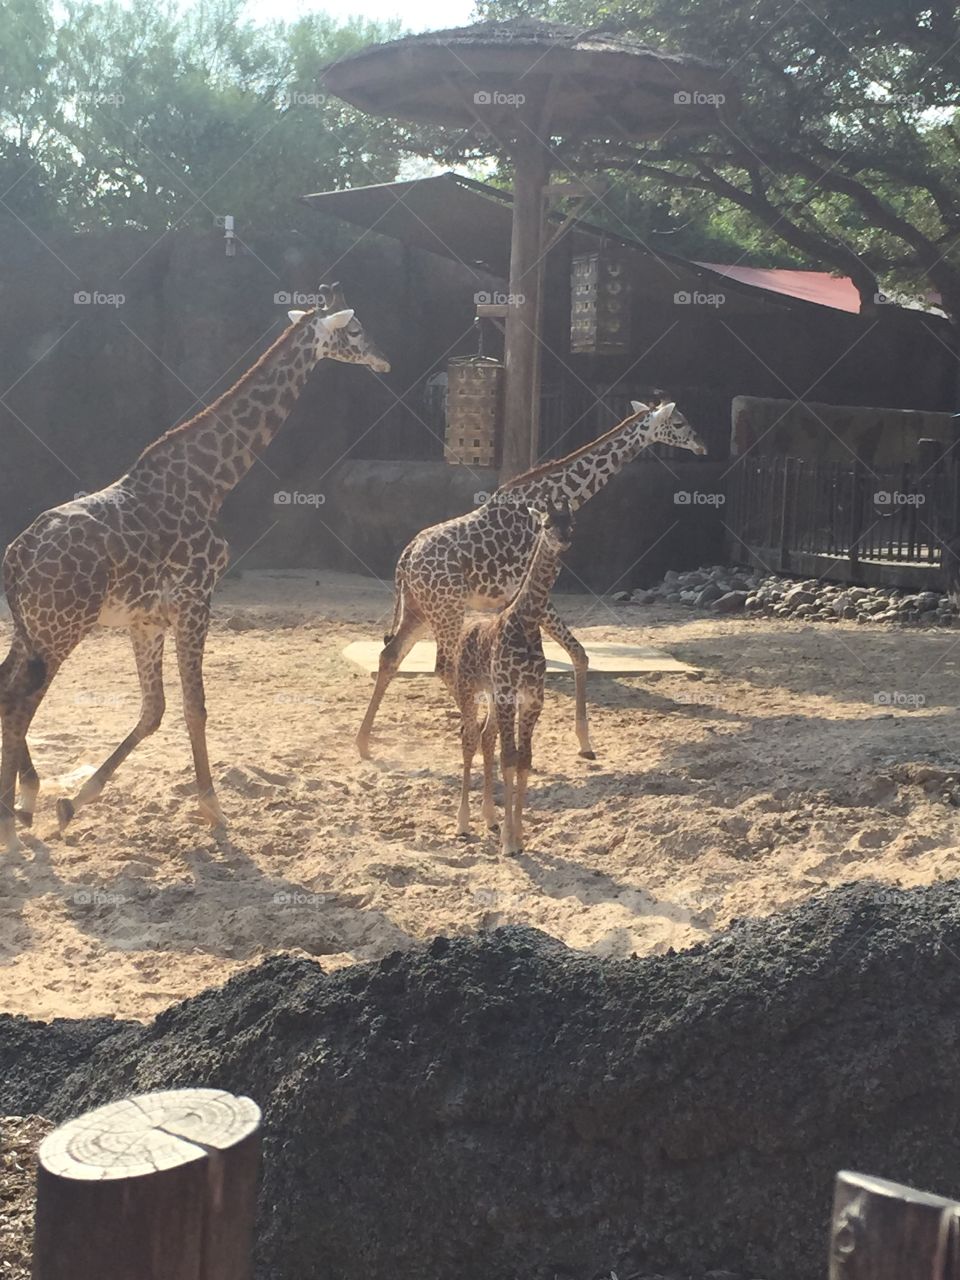 Giraffes at the Houston Zoo